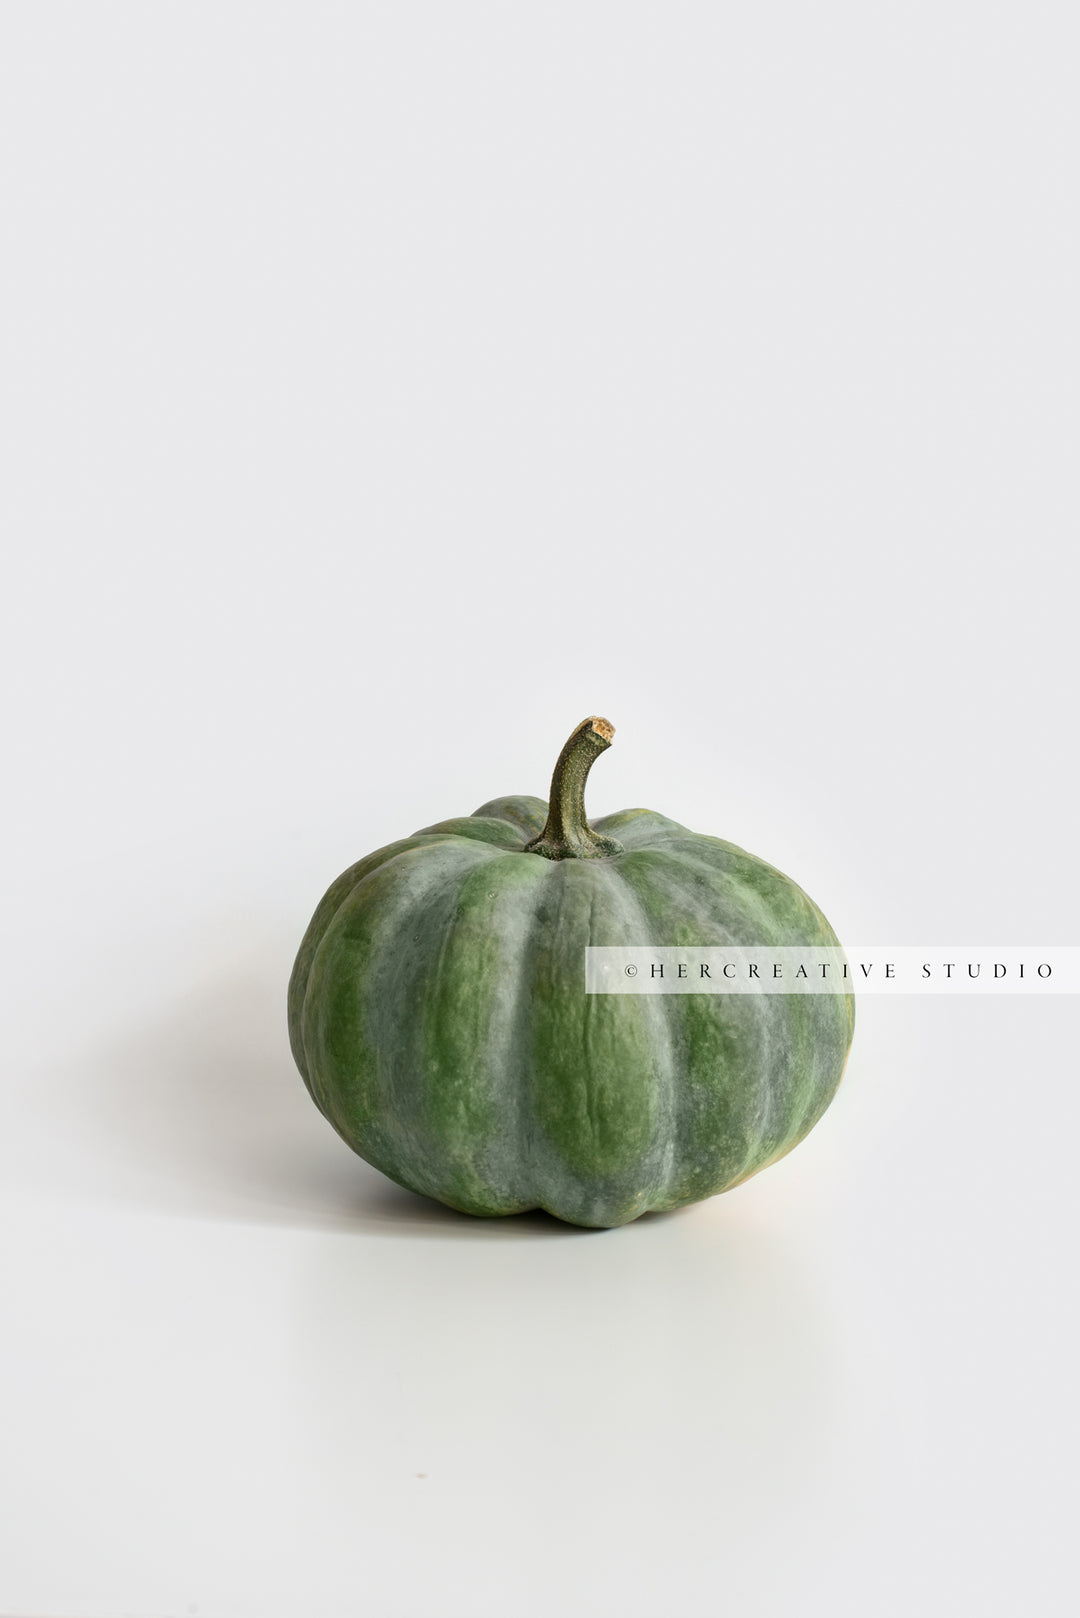 Green Pumpkin on White Background 2. Digital Stock Image.